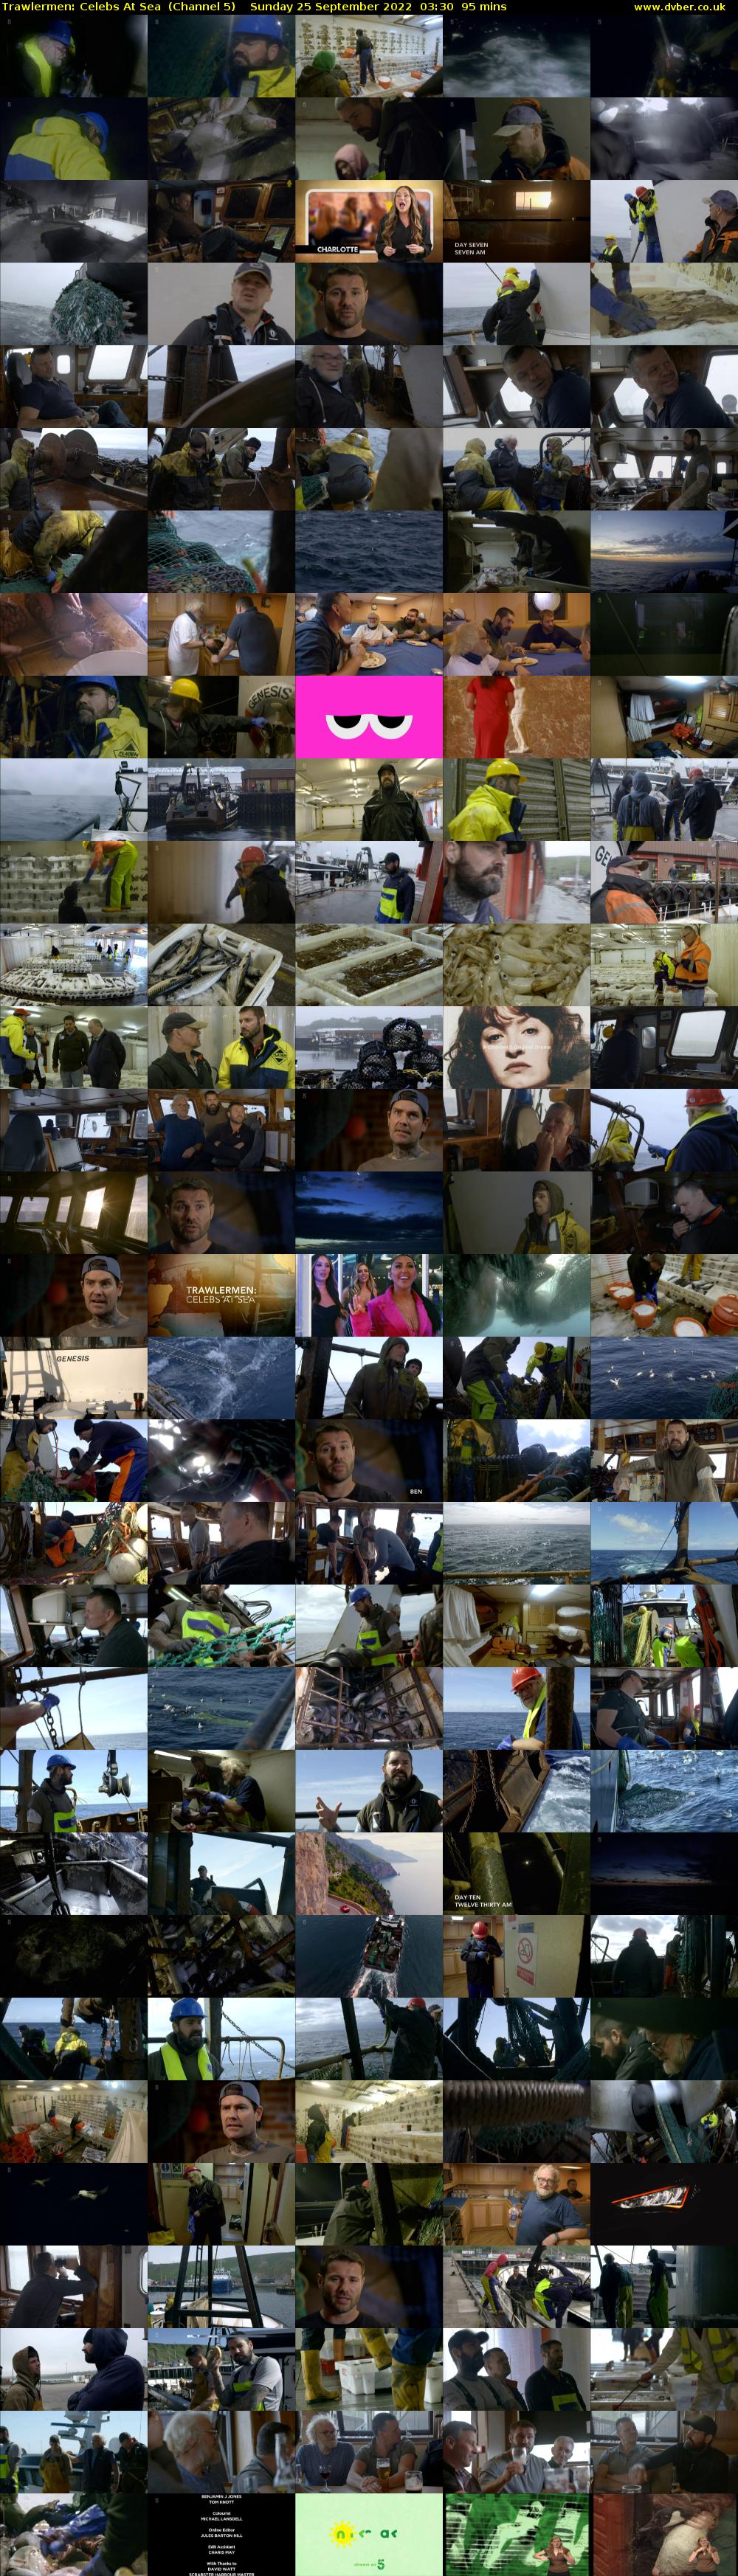 Trawlermen: Celebs At Sea  (Channel 5) Sunday 25 September 2022 03:30 - 05:05